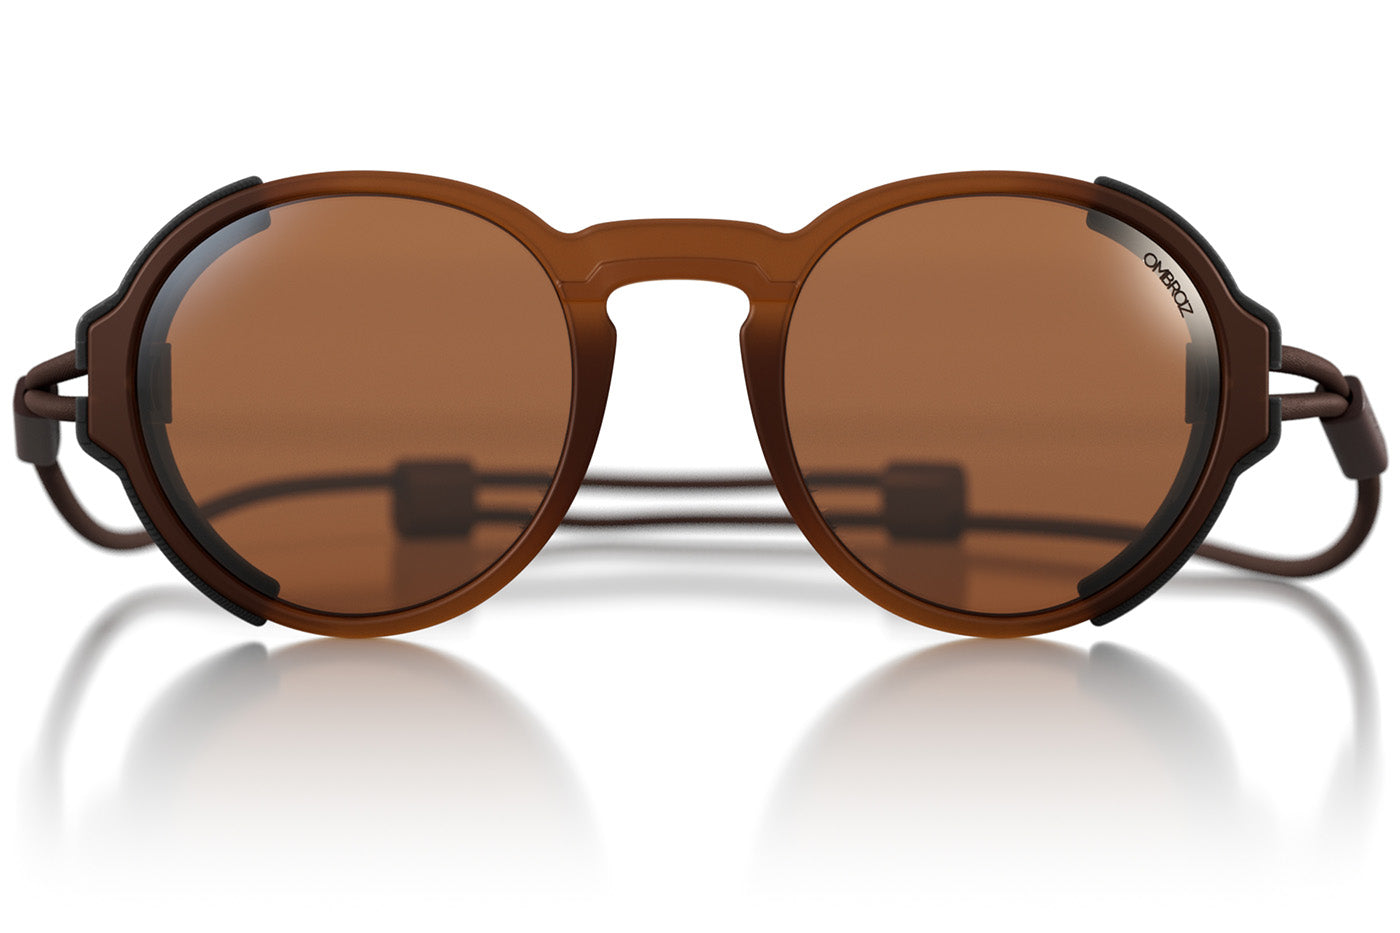 Dusk_brown_shields Ombraz unisex dusk brown Viale armless string sunglasses with visors